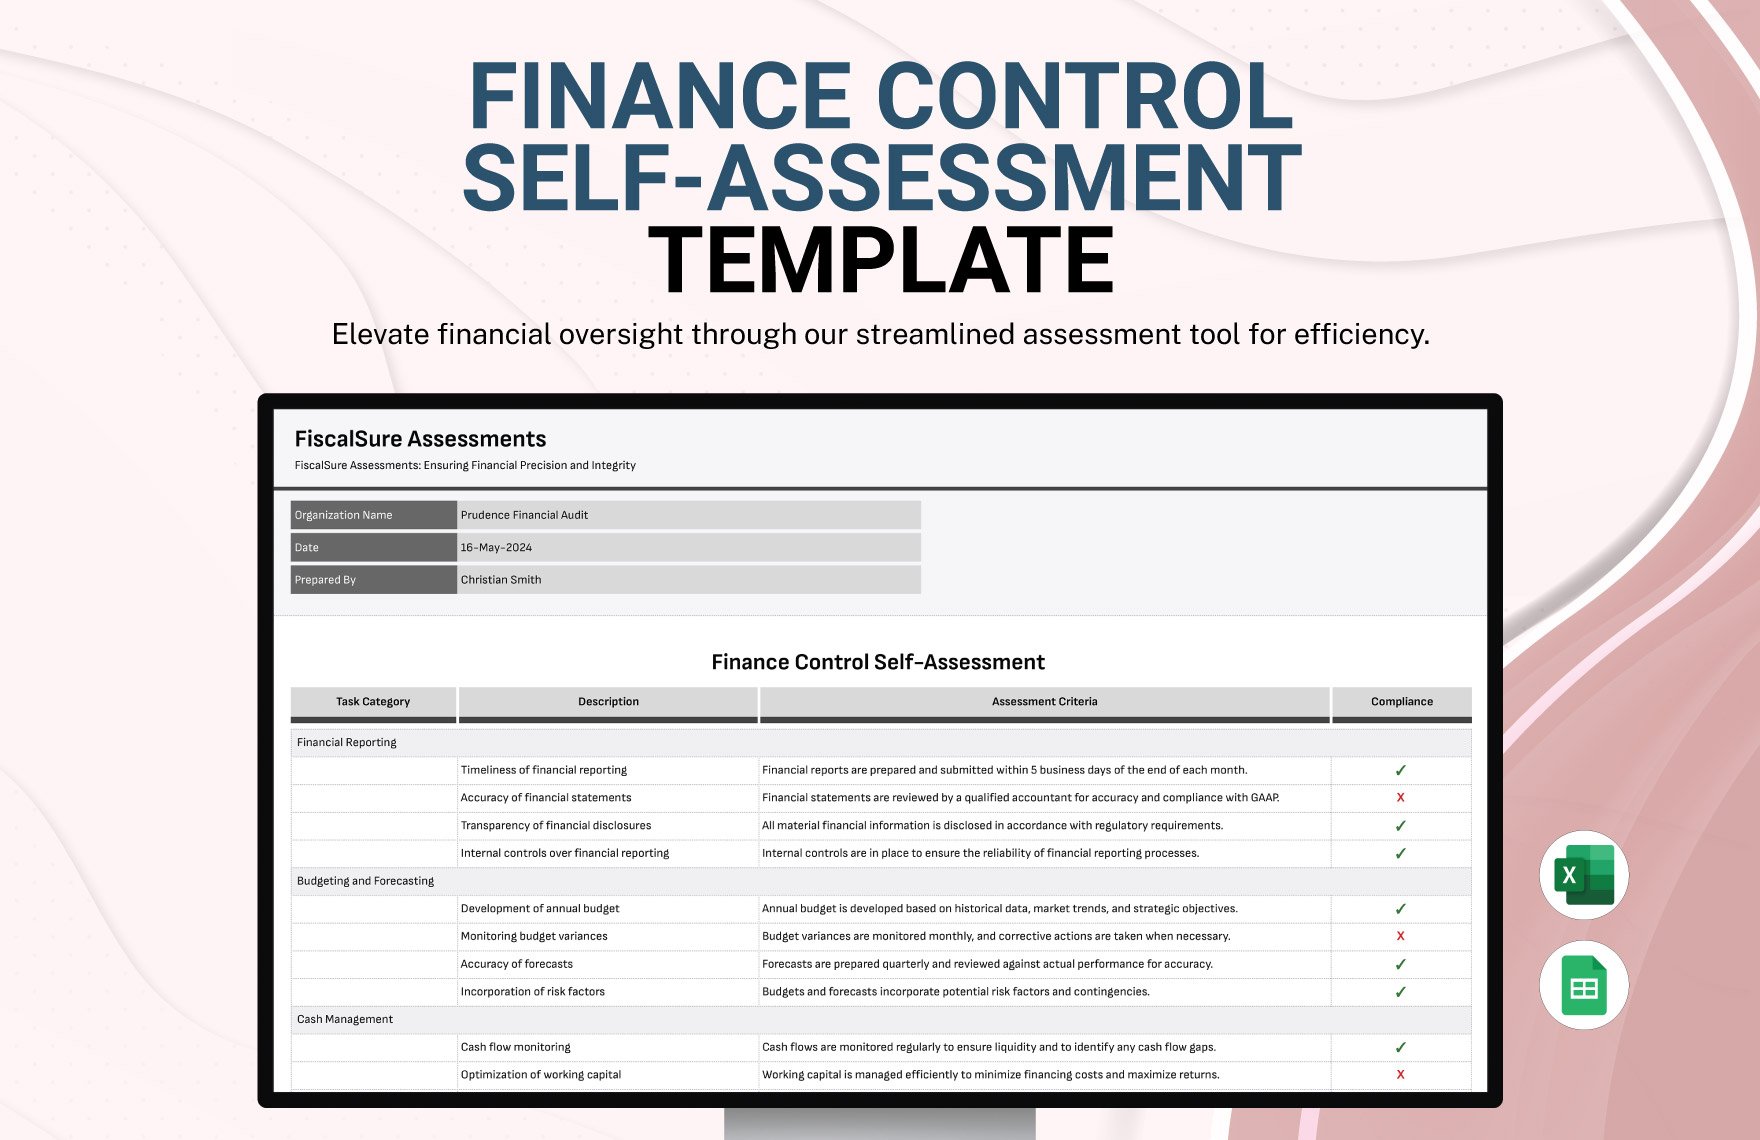 Finance Control Self-Assessment Template